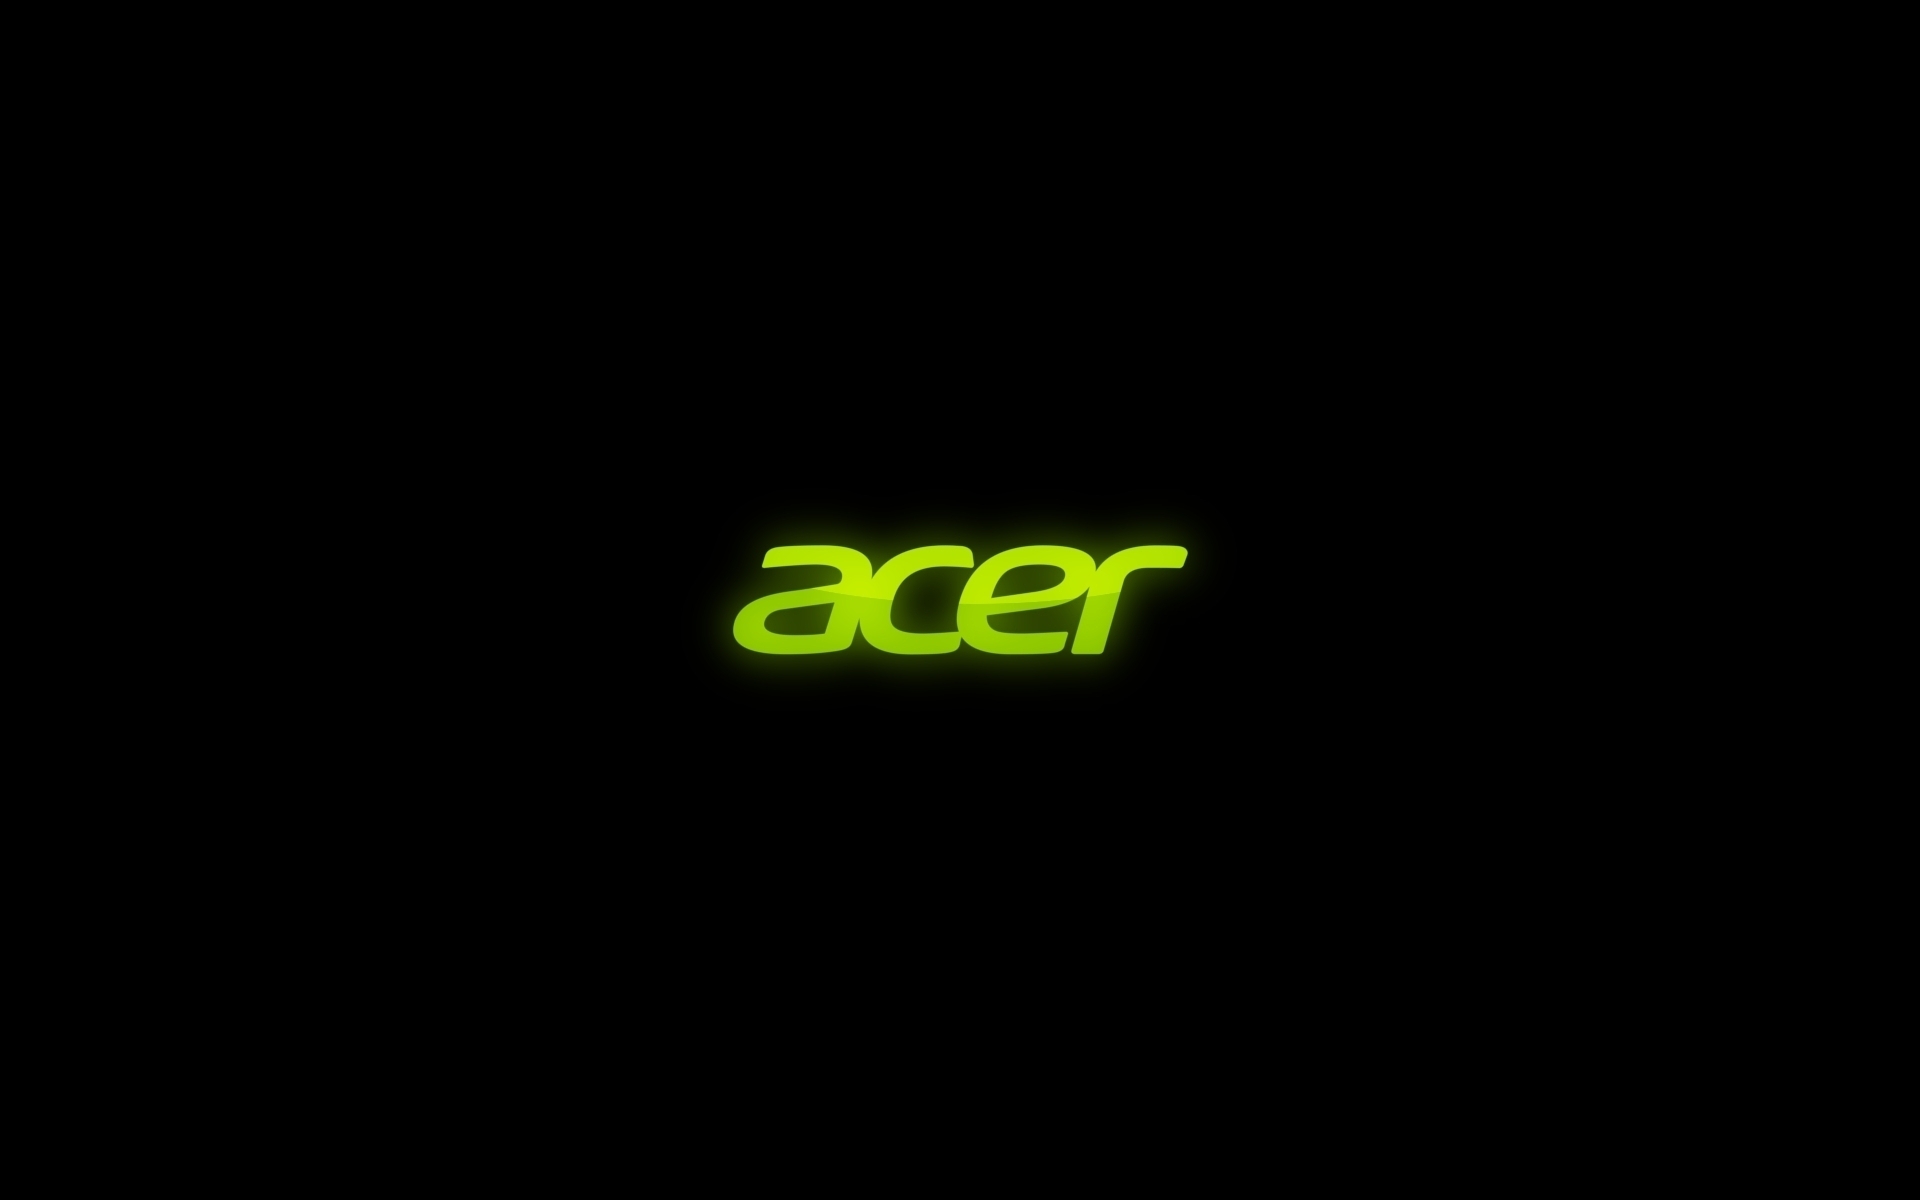 Acer On Black Desktop Pc And Mac Wallpaper